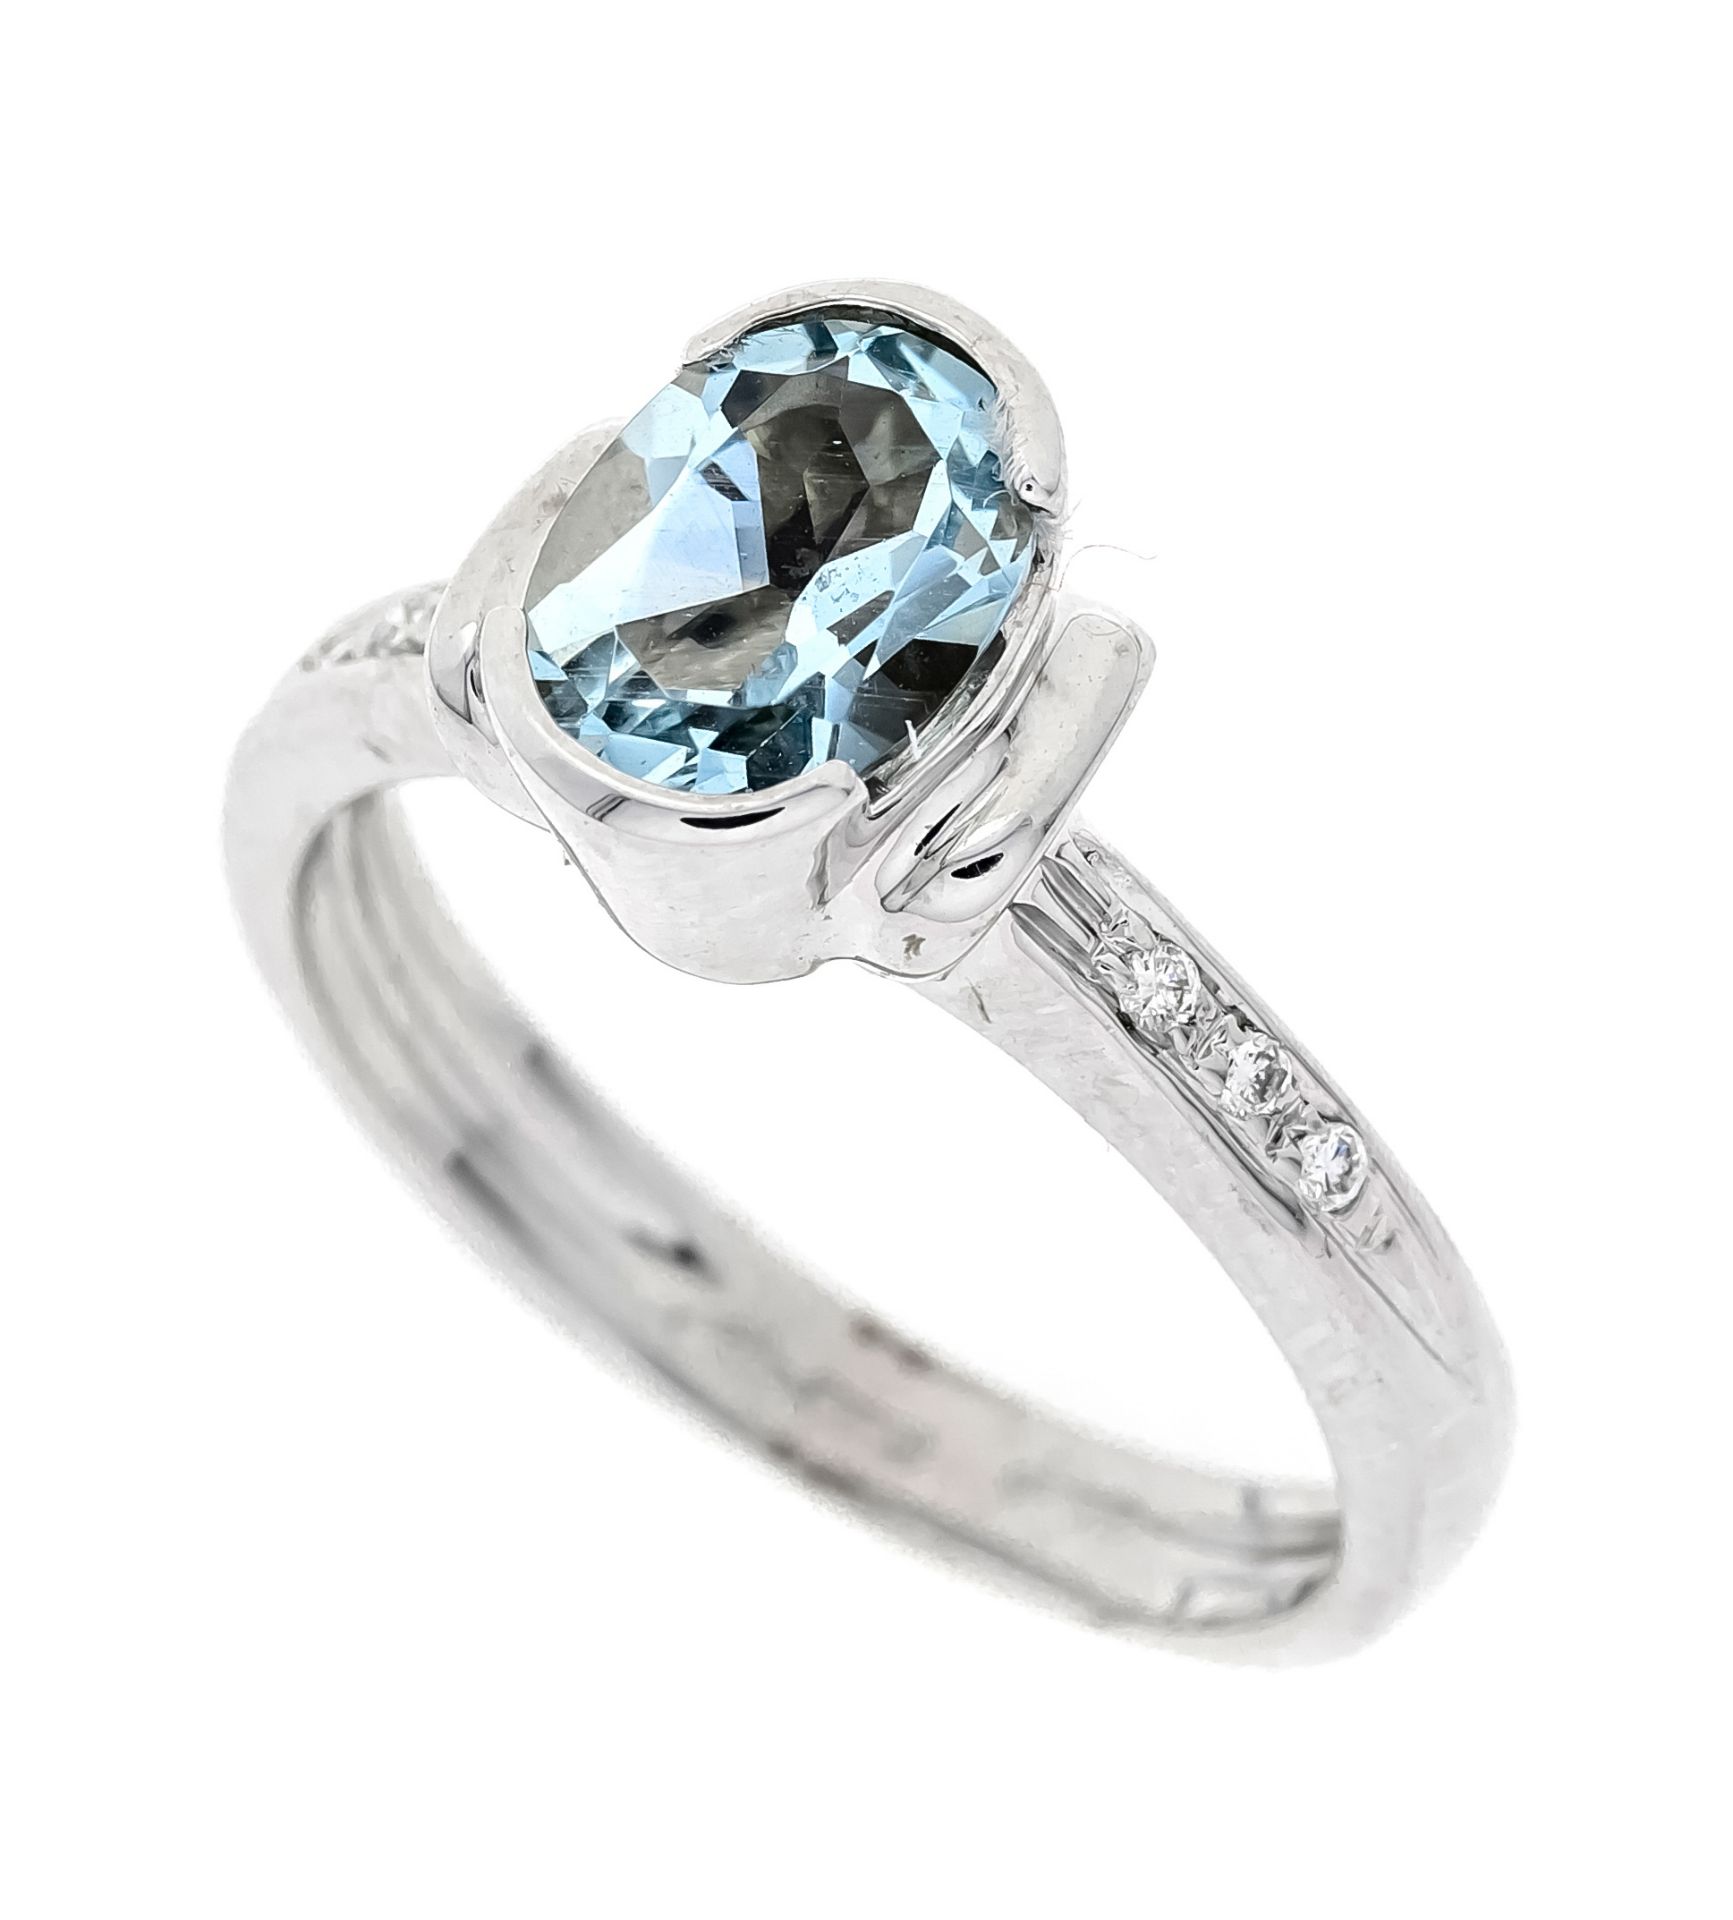 Aquamarine diamond ring WG 750/000 with an oval faceted aquamarine 8.01 x 6.01 mm, light blue, eye-